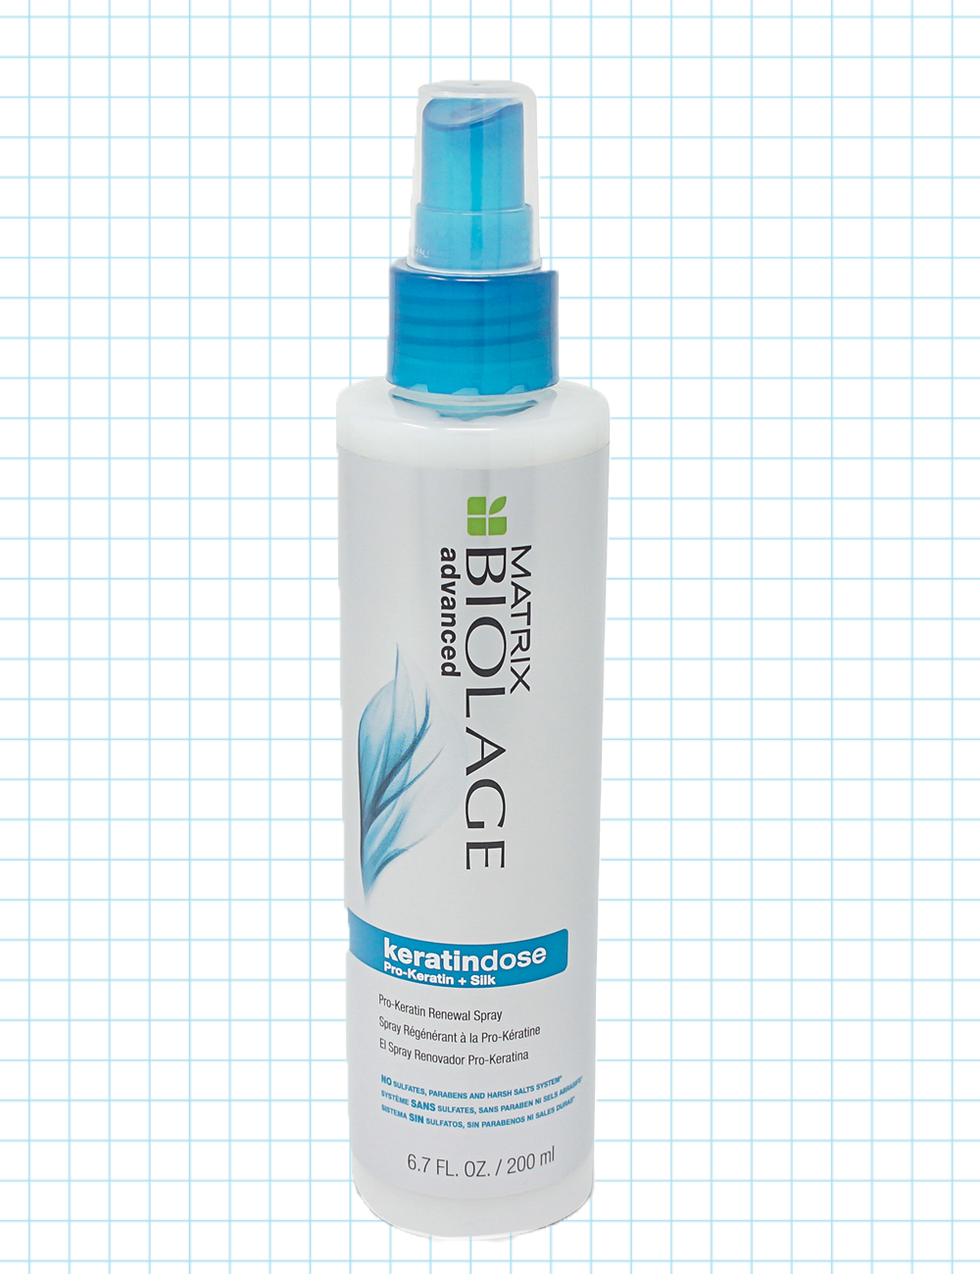 Advanced Keratindose Pro-Keratin + Silk Renewal Spray